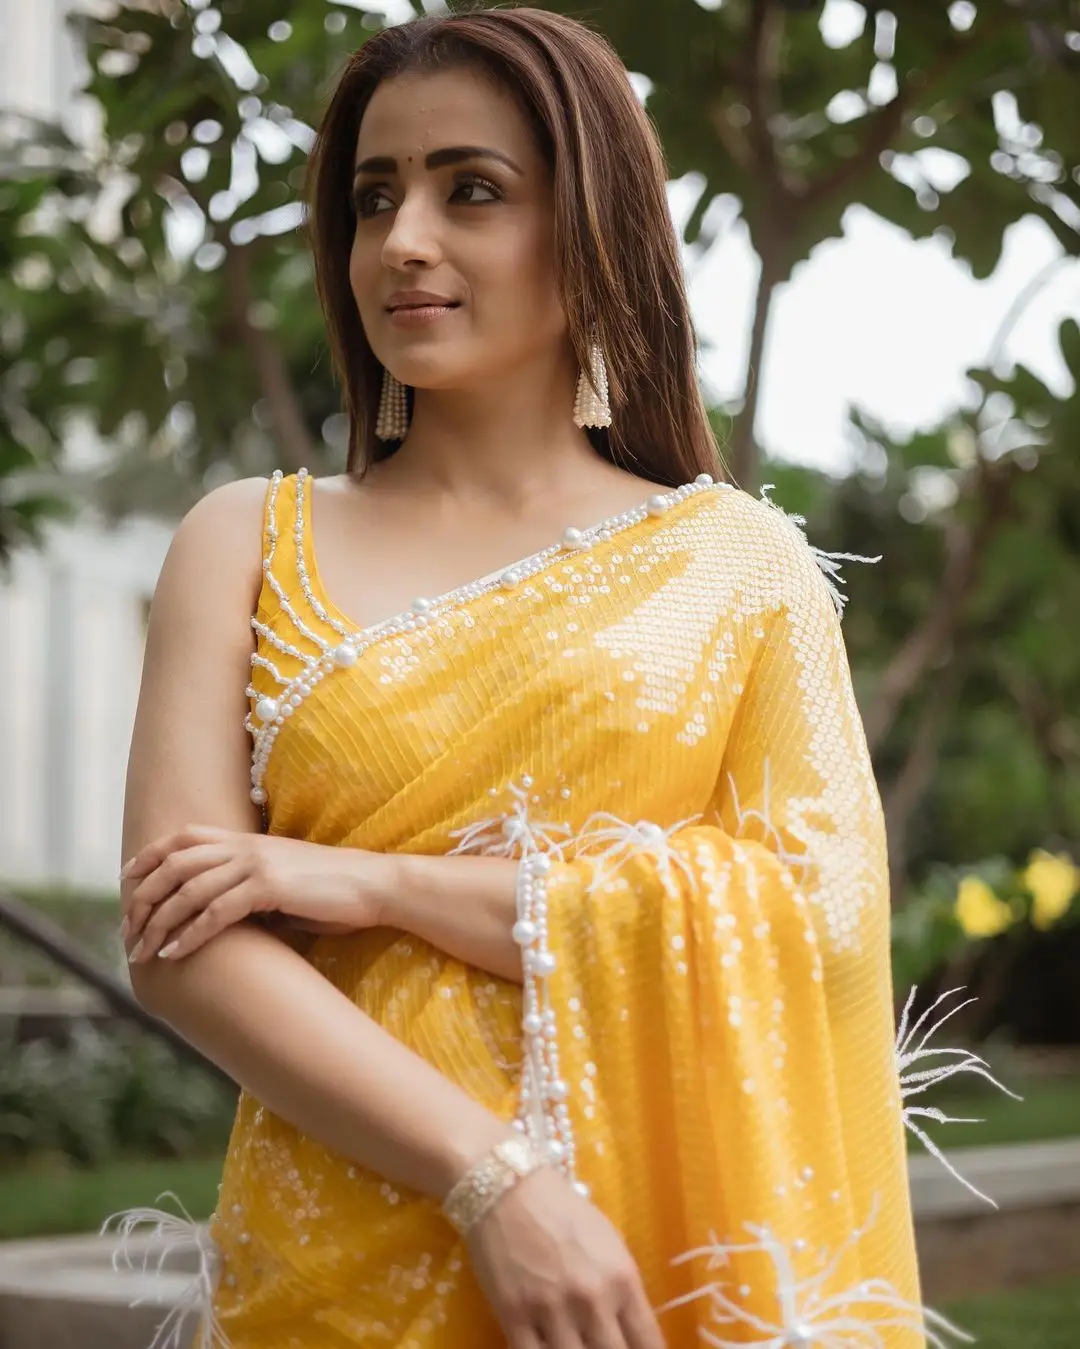 Trisha Krishnan Mesmerizing Looks In Beautiful Yellow Designer Saree